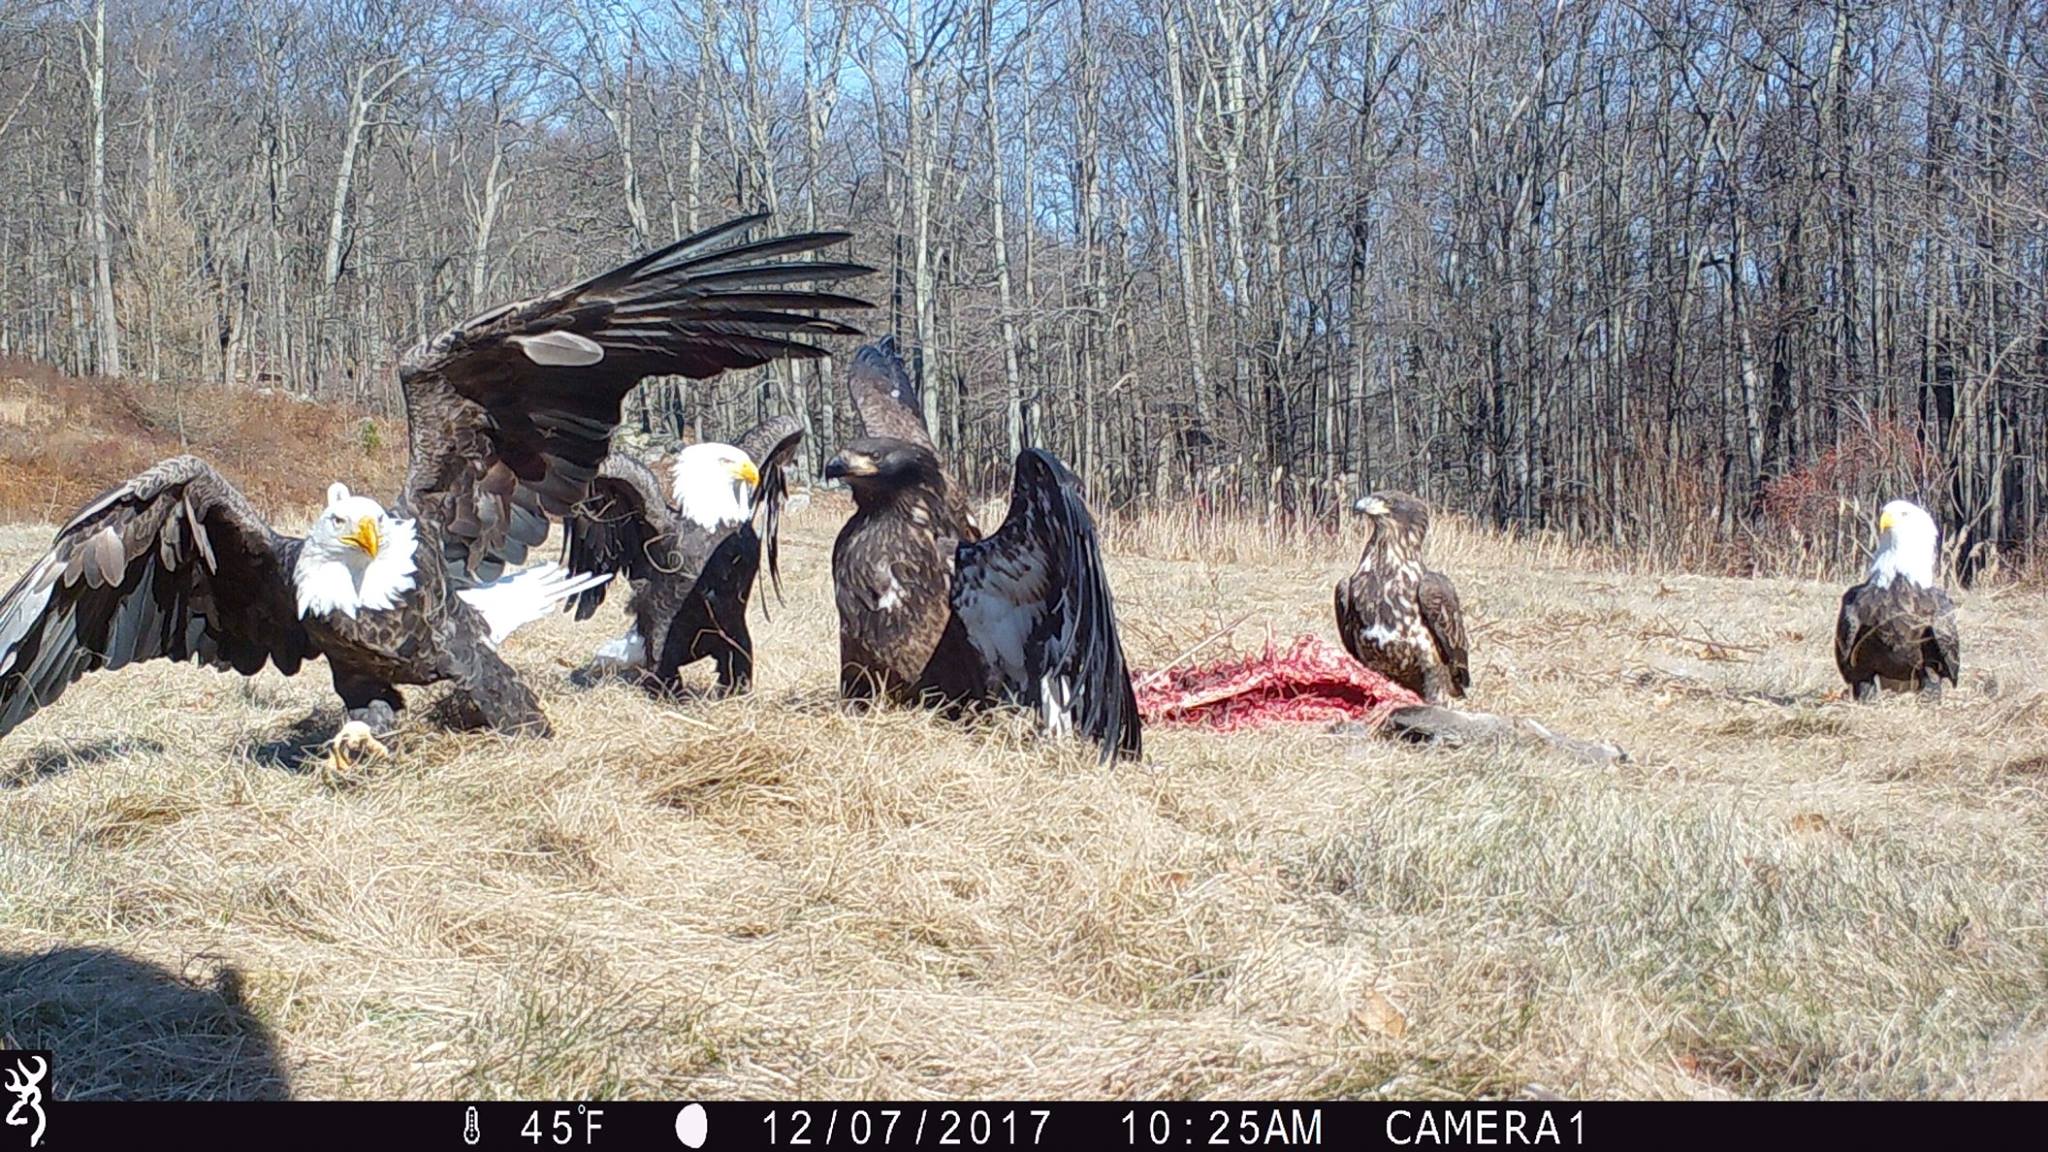 Group of bald eagles feeding on deer carcass